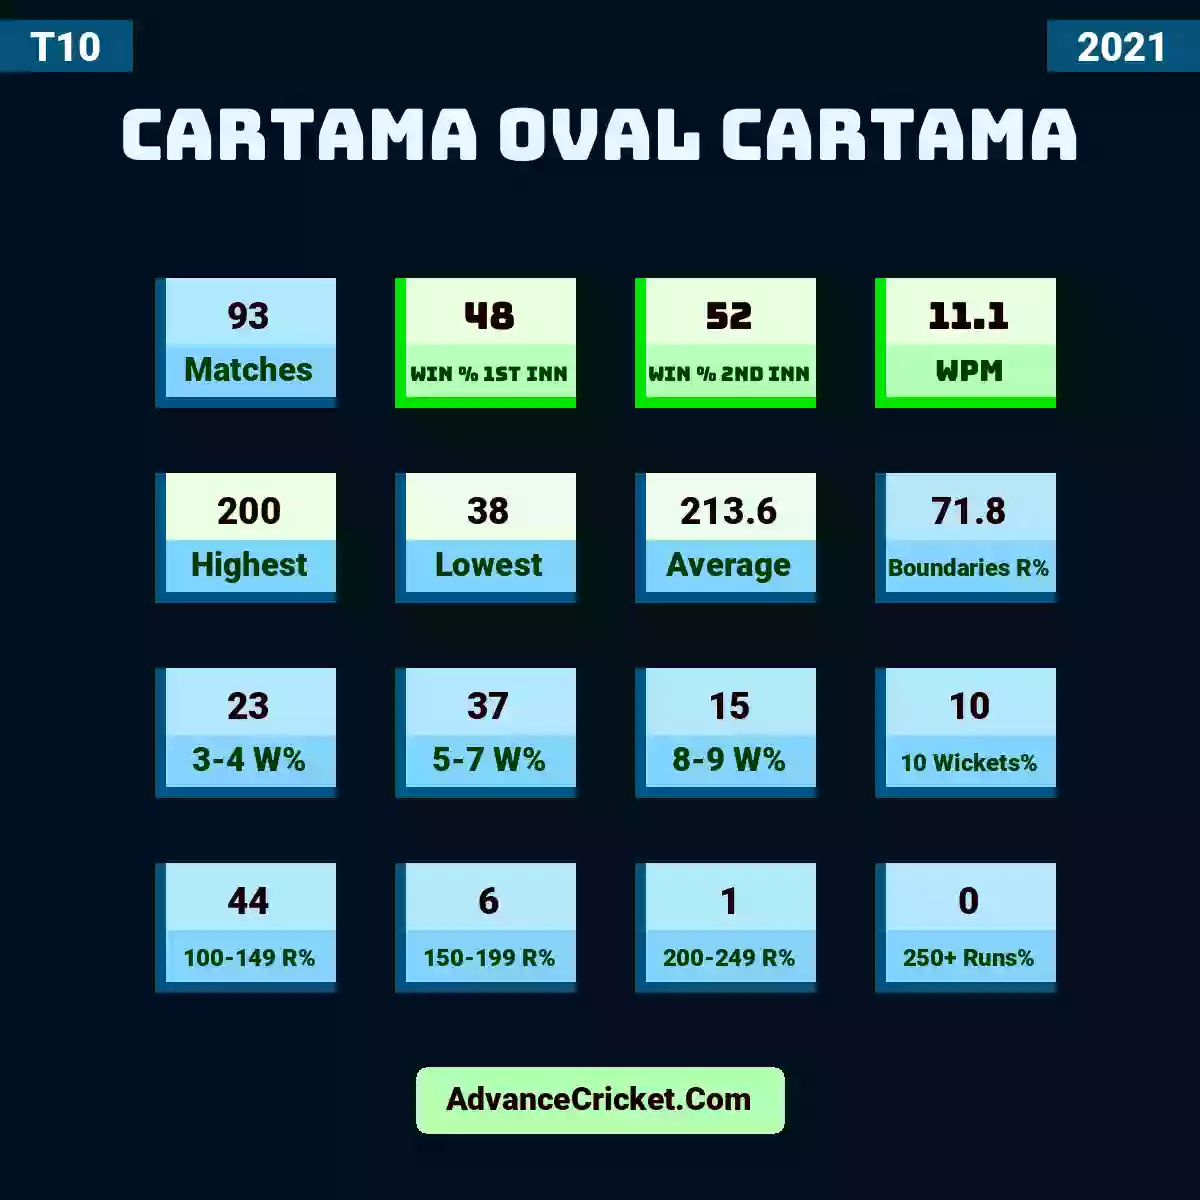 Image showing Cartama Oval Cartama with Matches: 93, Win % 1st Inn: 48, Win % 2nd Inn: 52, WPM: 11.1, Highest: 200, Lowest: 38, Average: 213.6, Boundaries R%: 71.8, 3-4 W%: 23, 5-7 W%: 37, 8-9 W%: 15, 10 Wickets%: 10, 100-149 R%: 44, 150-199 R%: 6, 200-249 R%: 1, 250+ Runs%: 0.